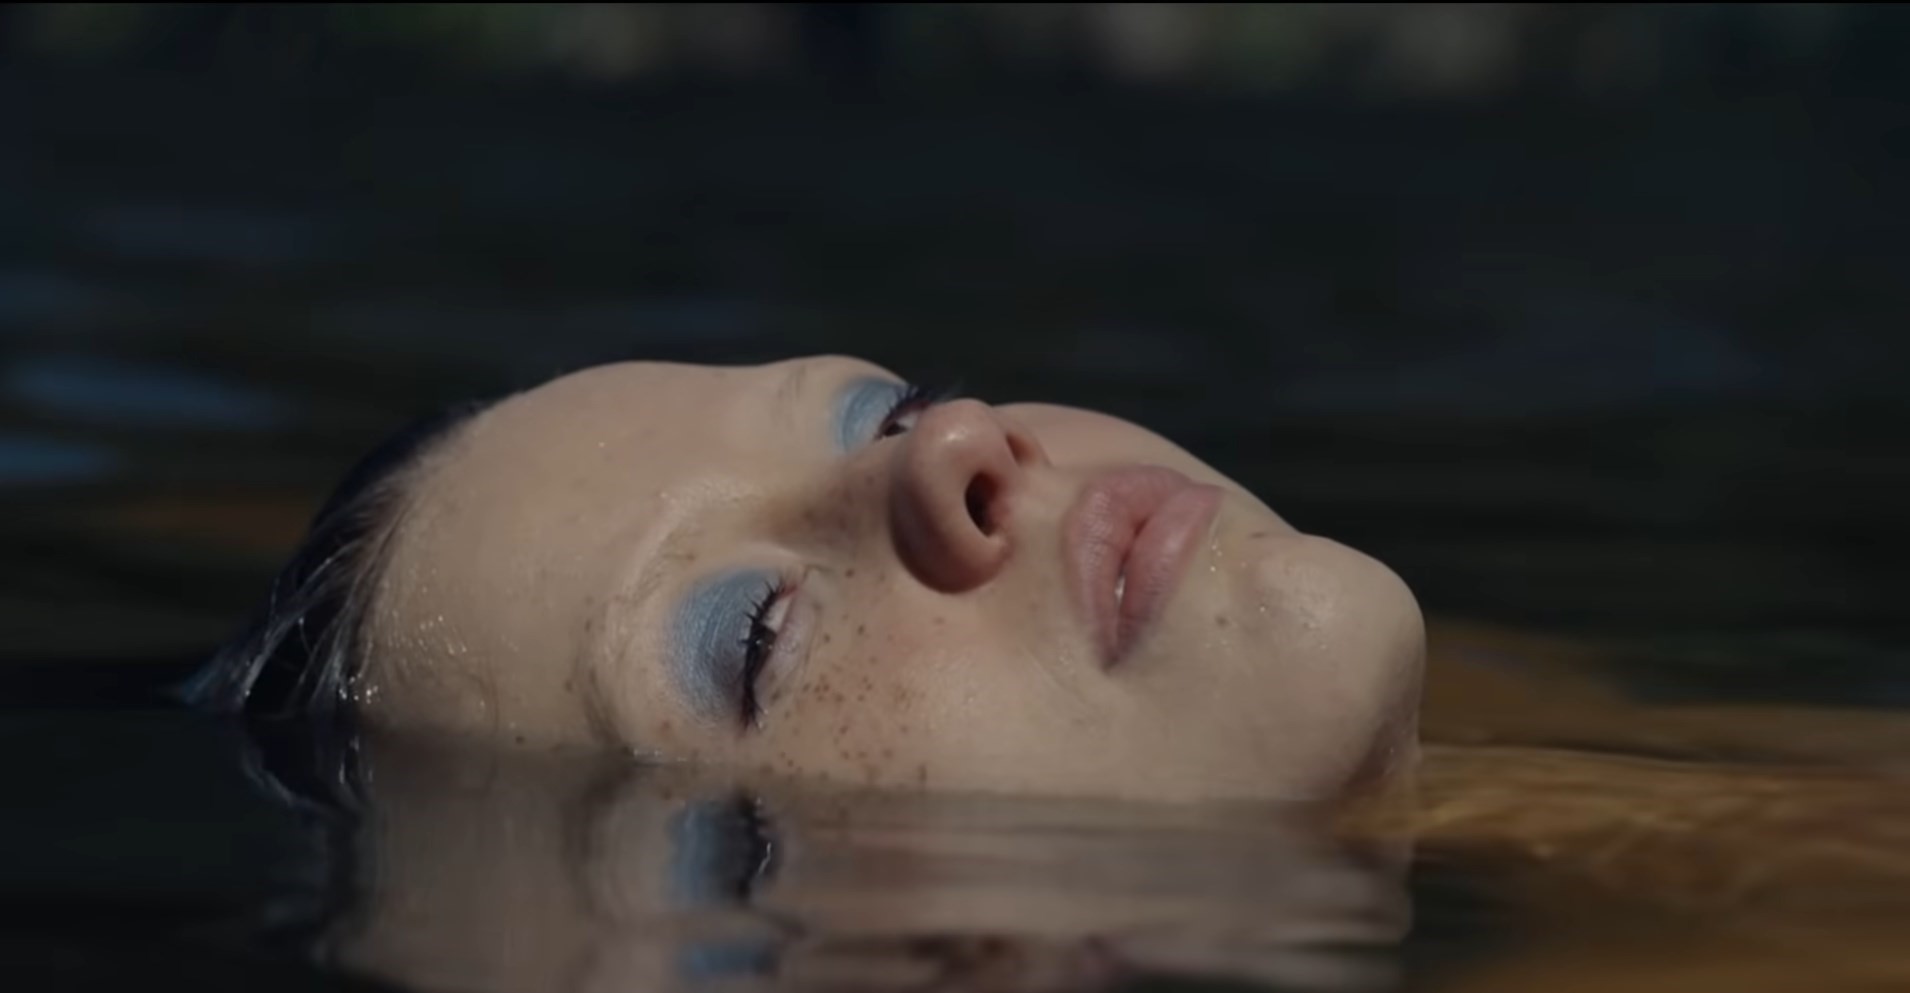 Cudi Xxx Videos - Watch Mia Goth in the trailer for A24's new porn-themed horror movie | Dazed